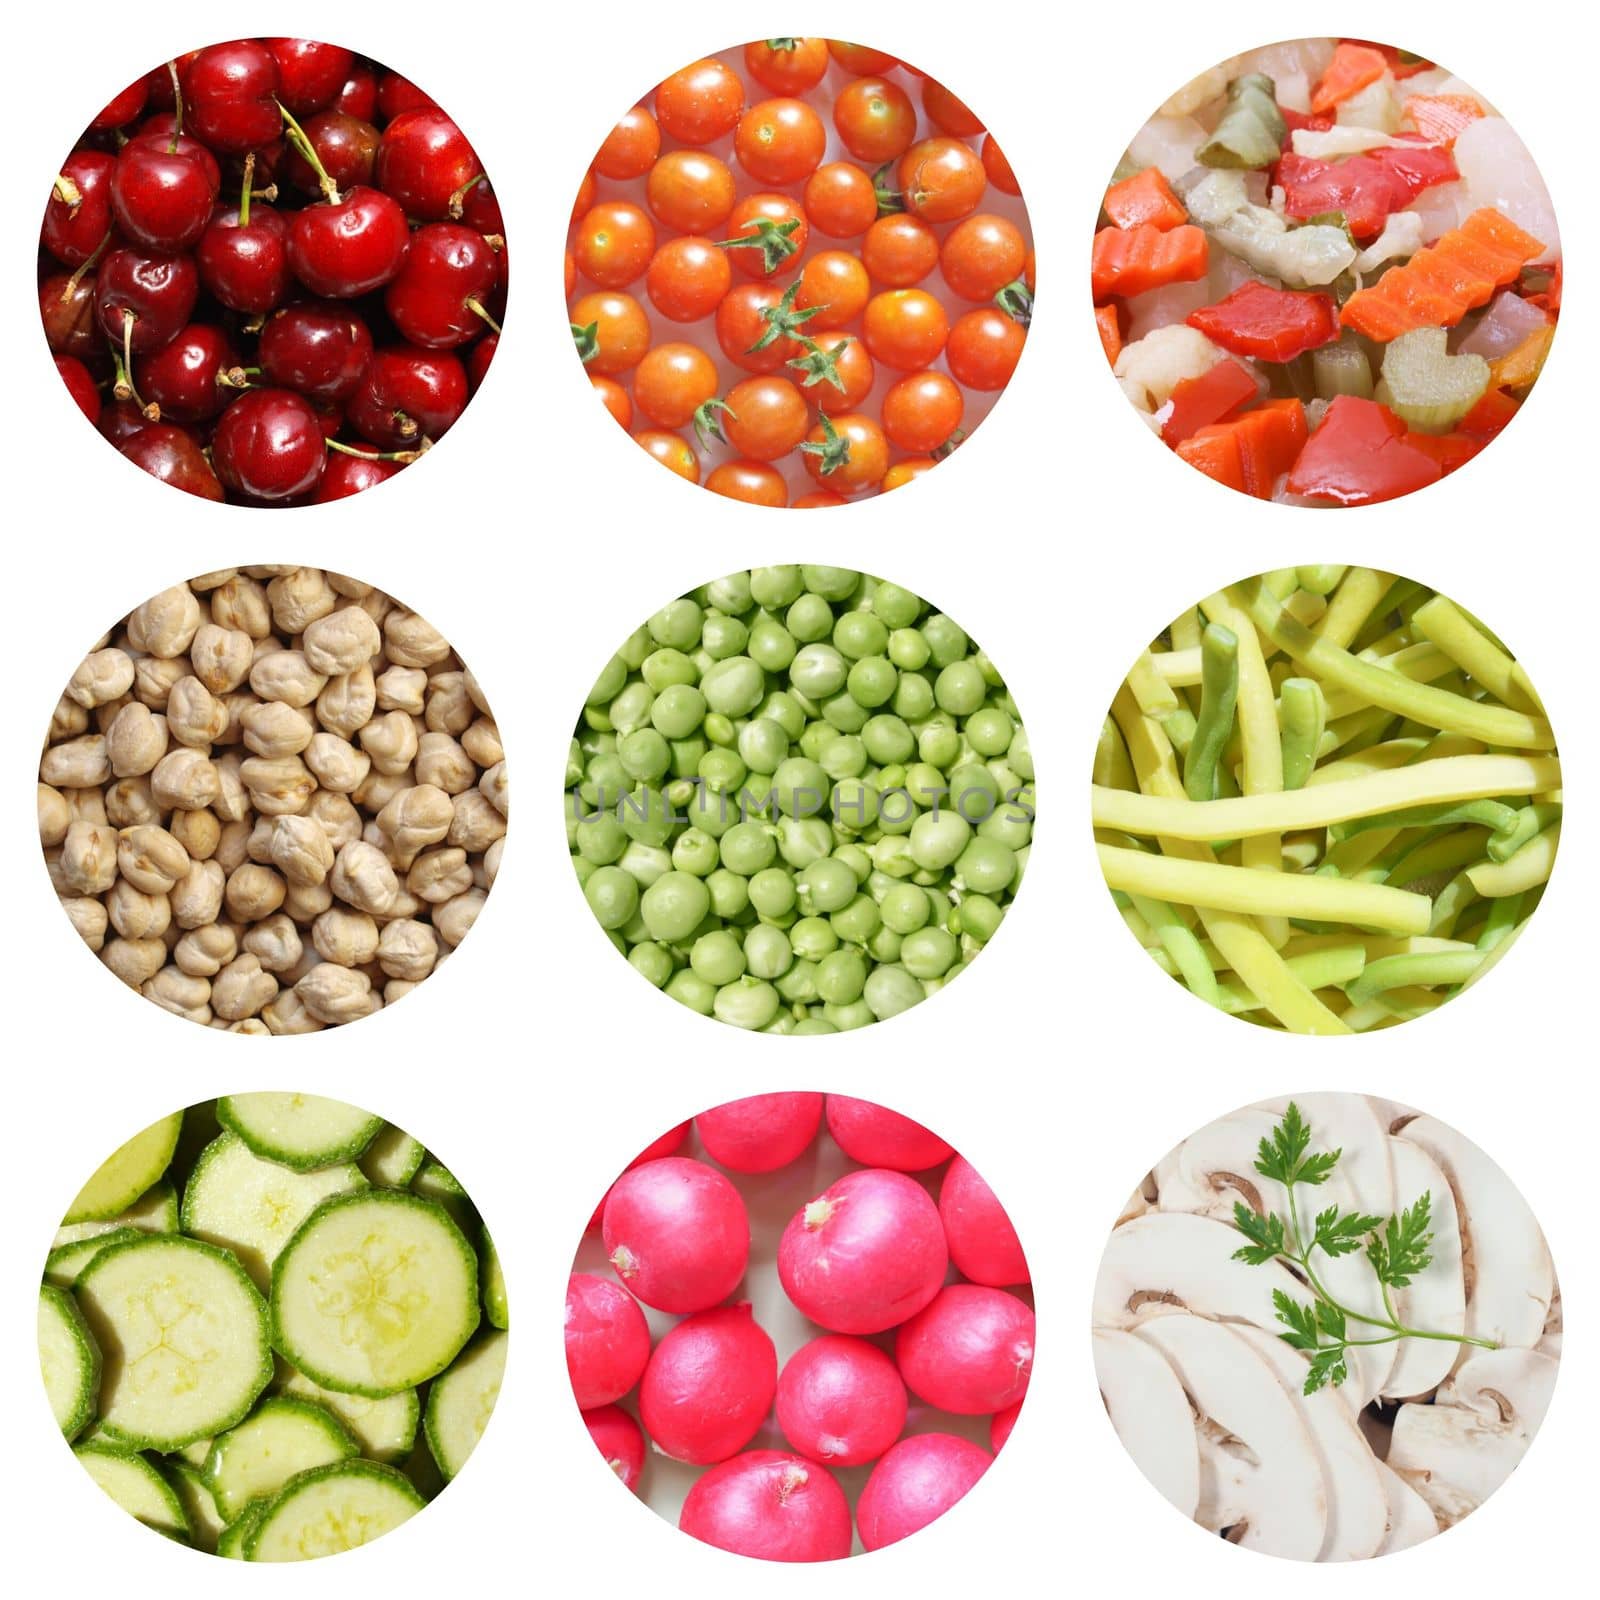 Vegetarian food collage: fruits, vegetables and mushrooms